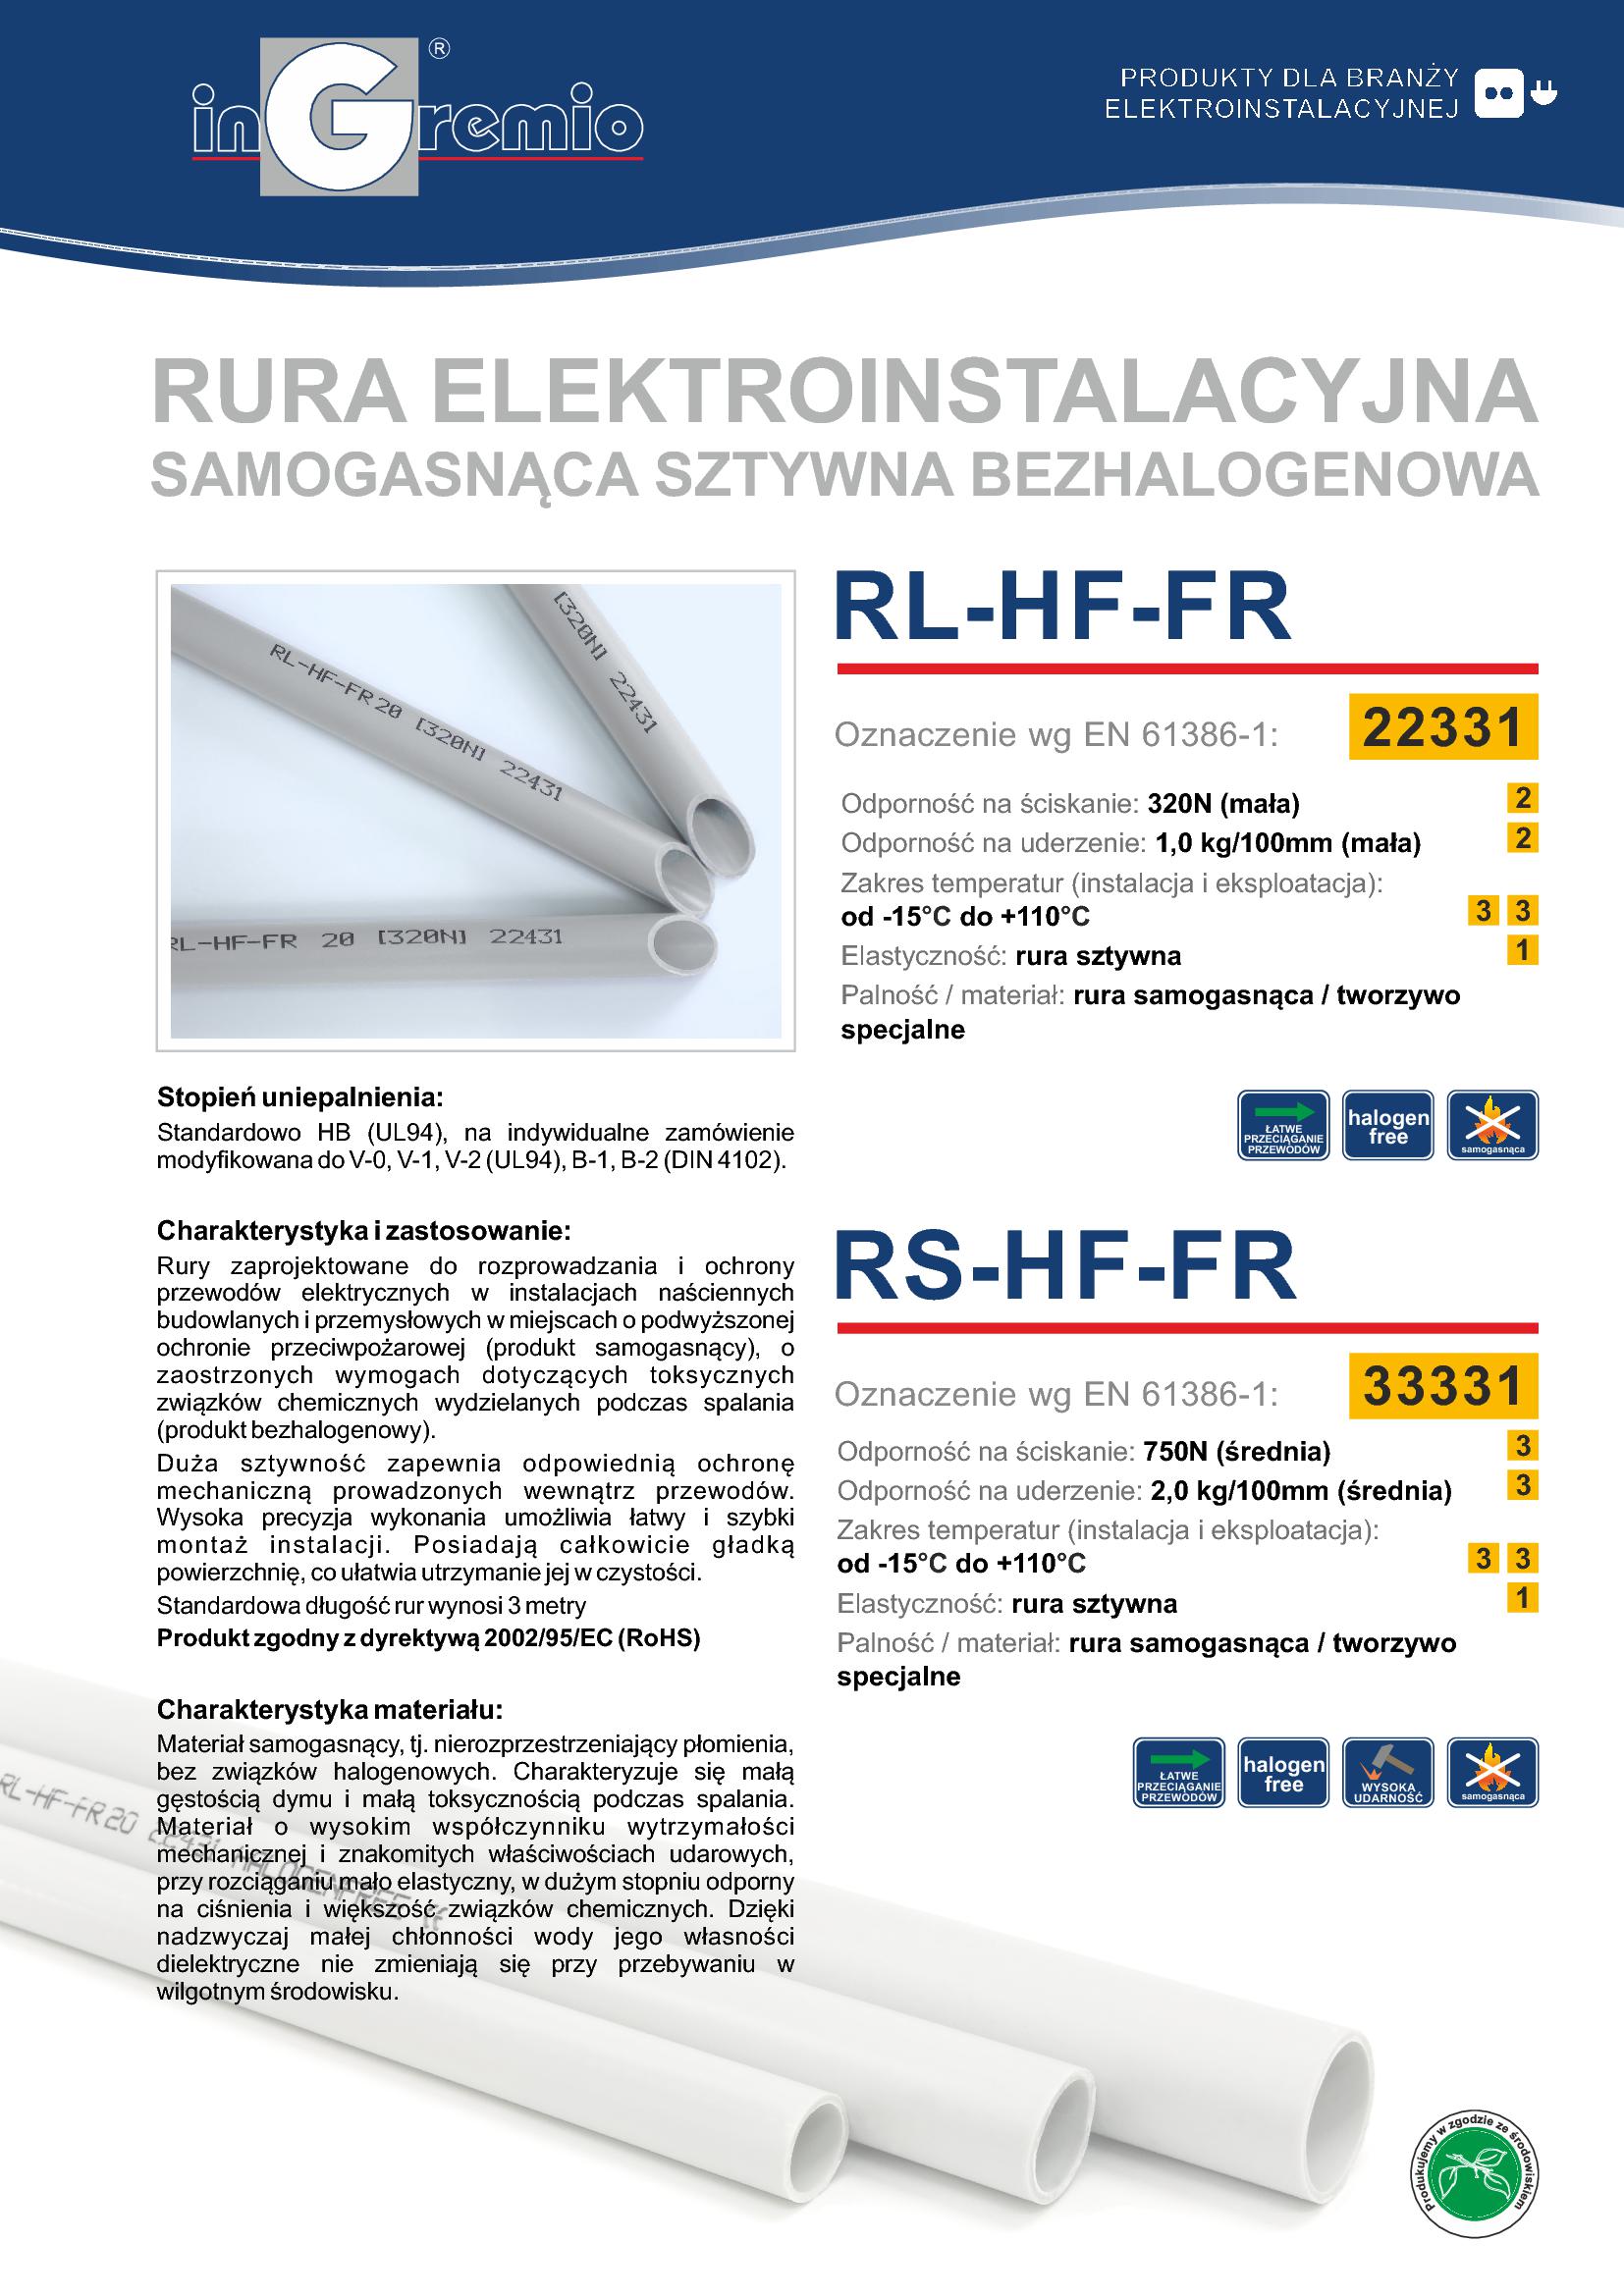 INGR_Catalog_RL-HF-FR-RS-HF-FR